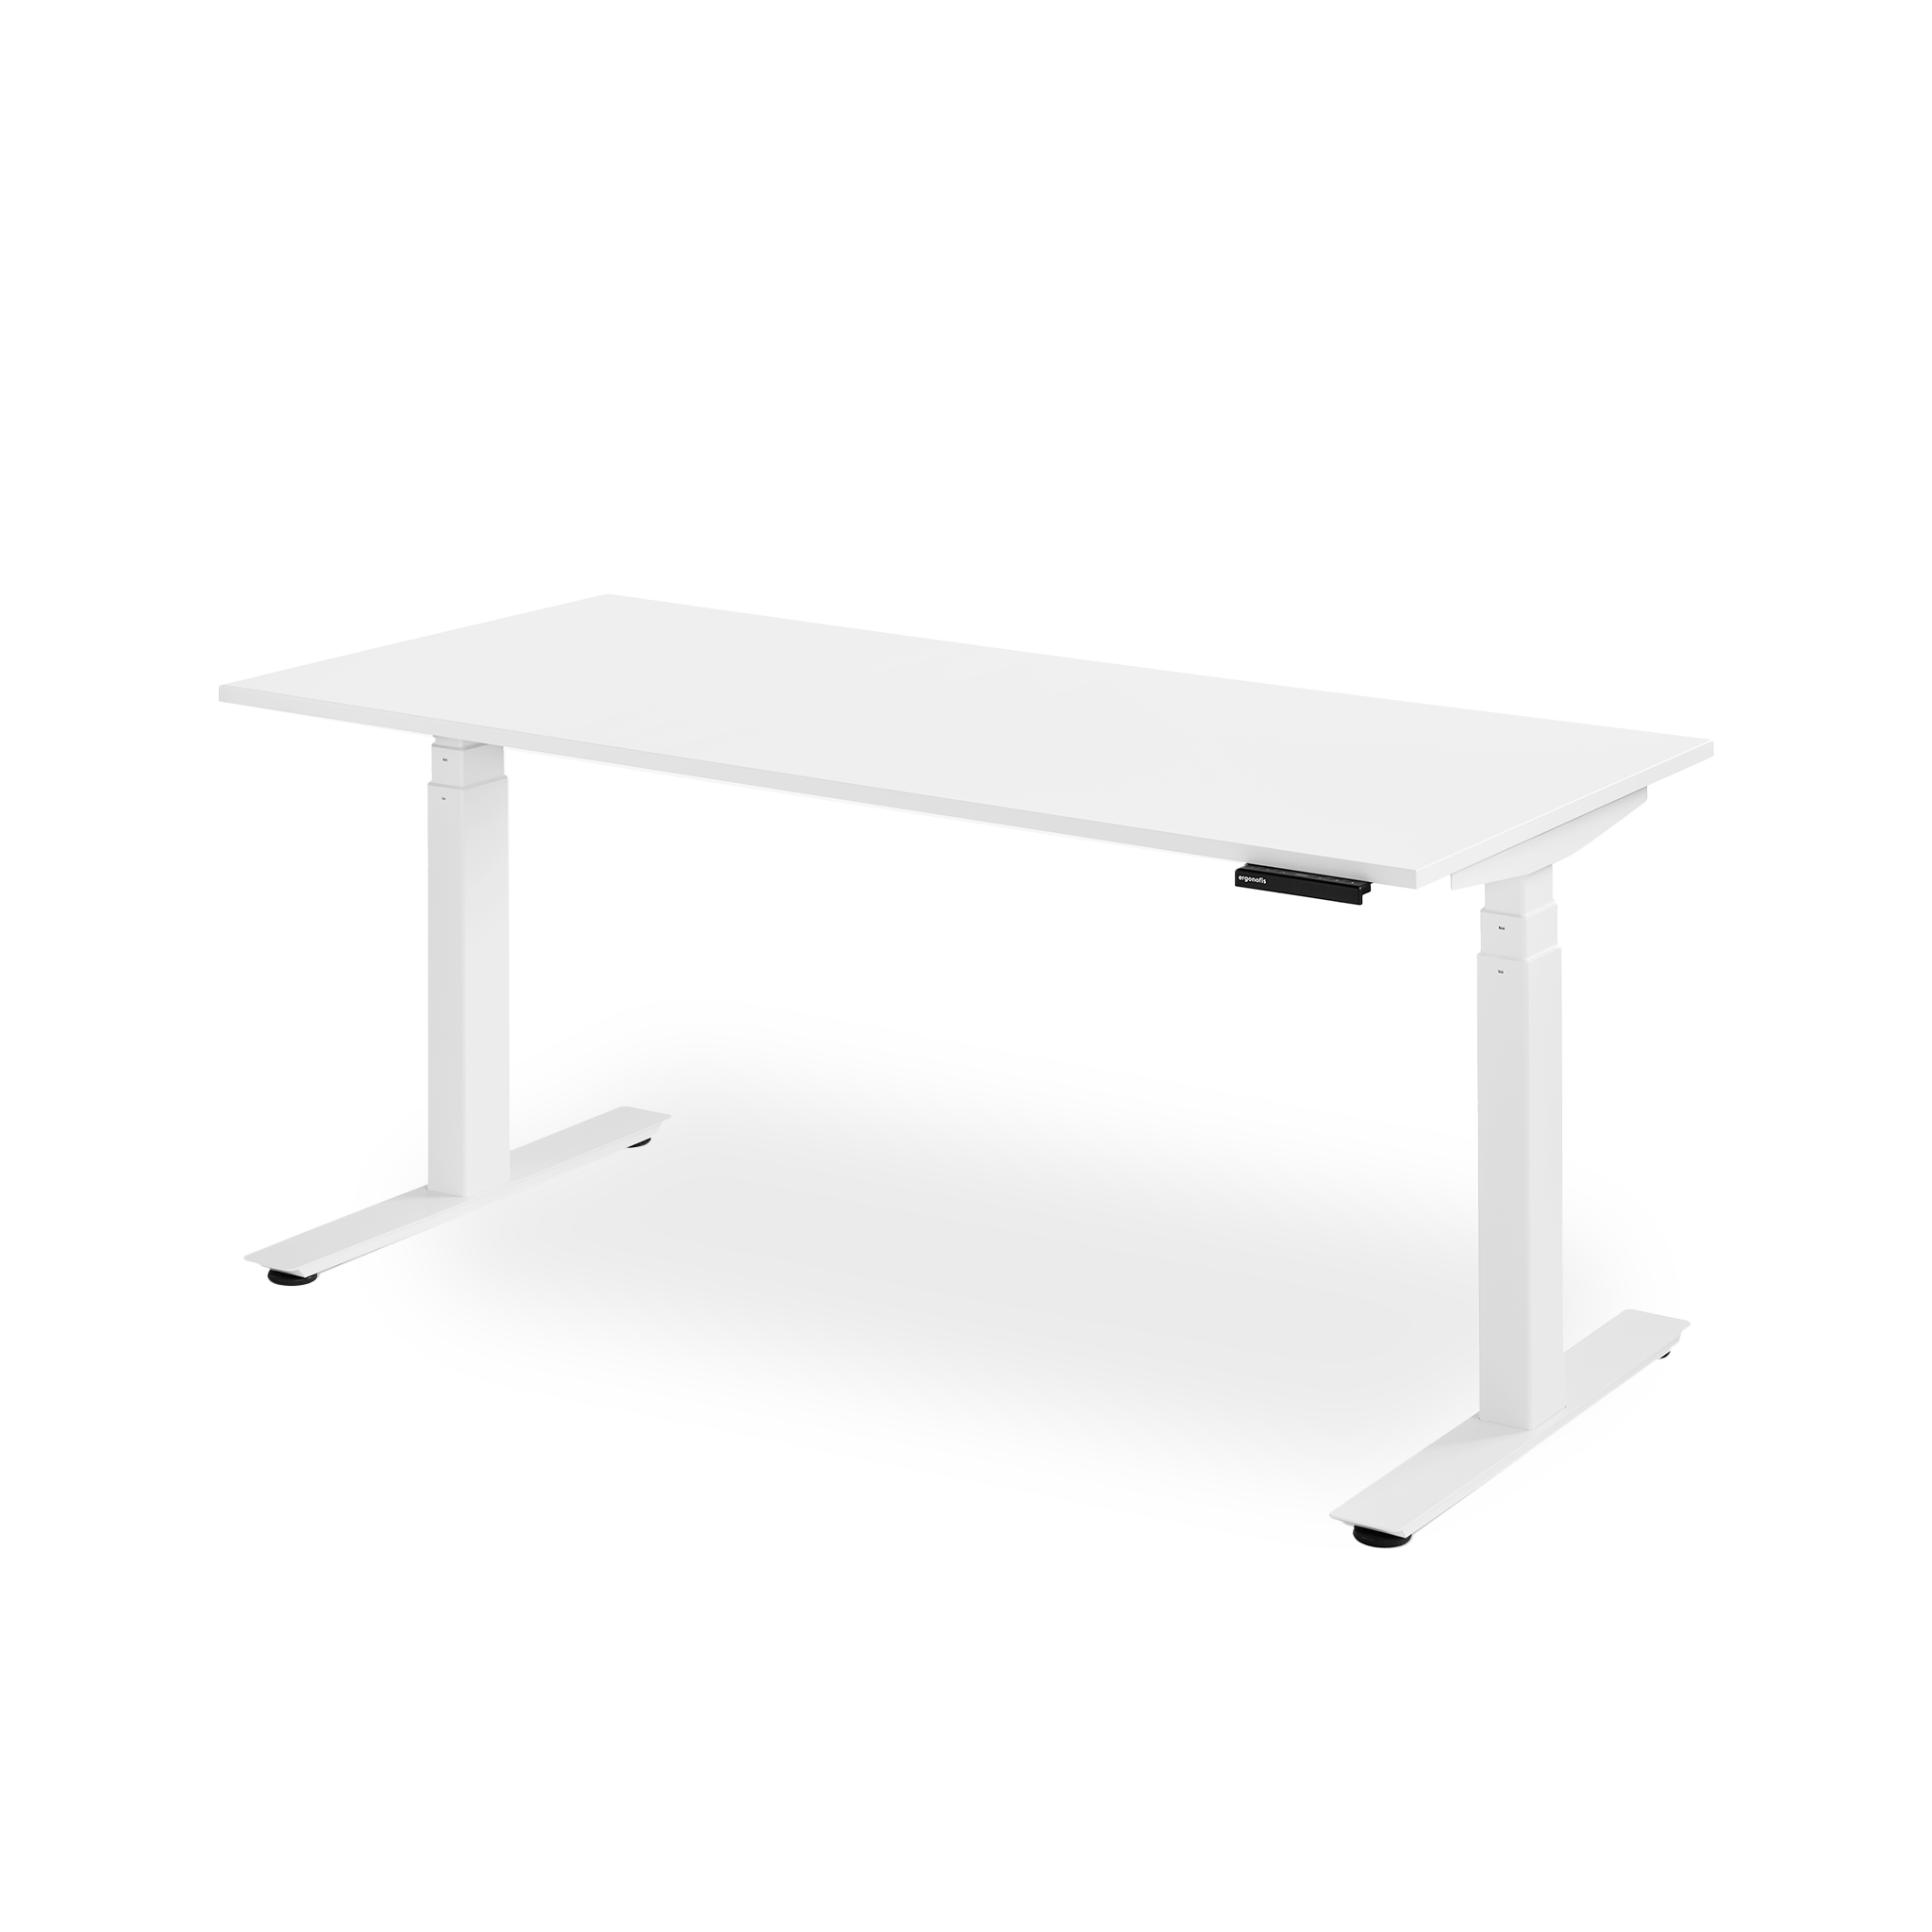 Standing desk - Wikipedia